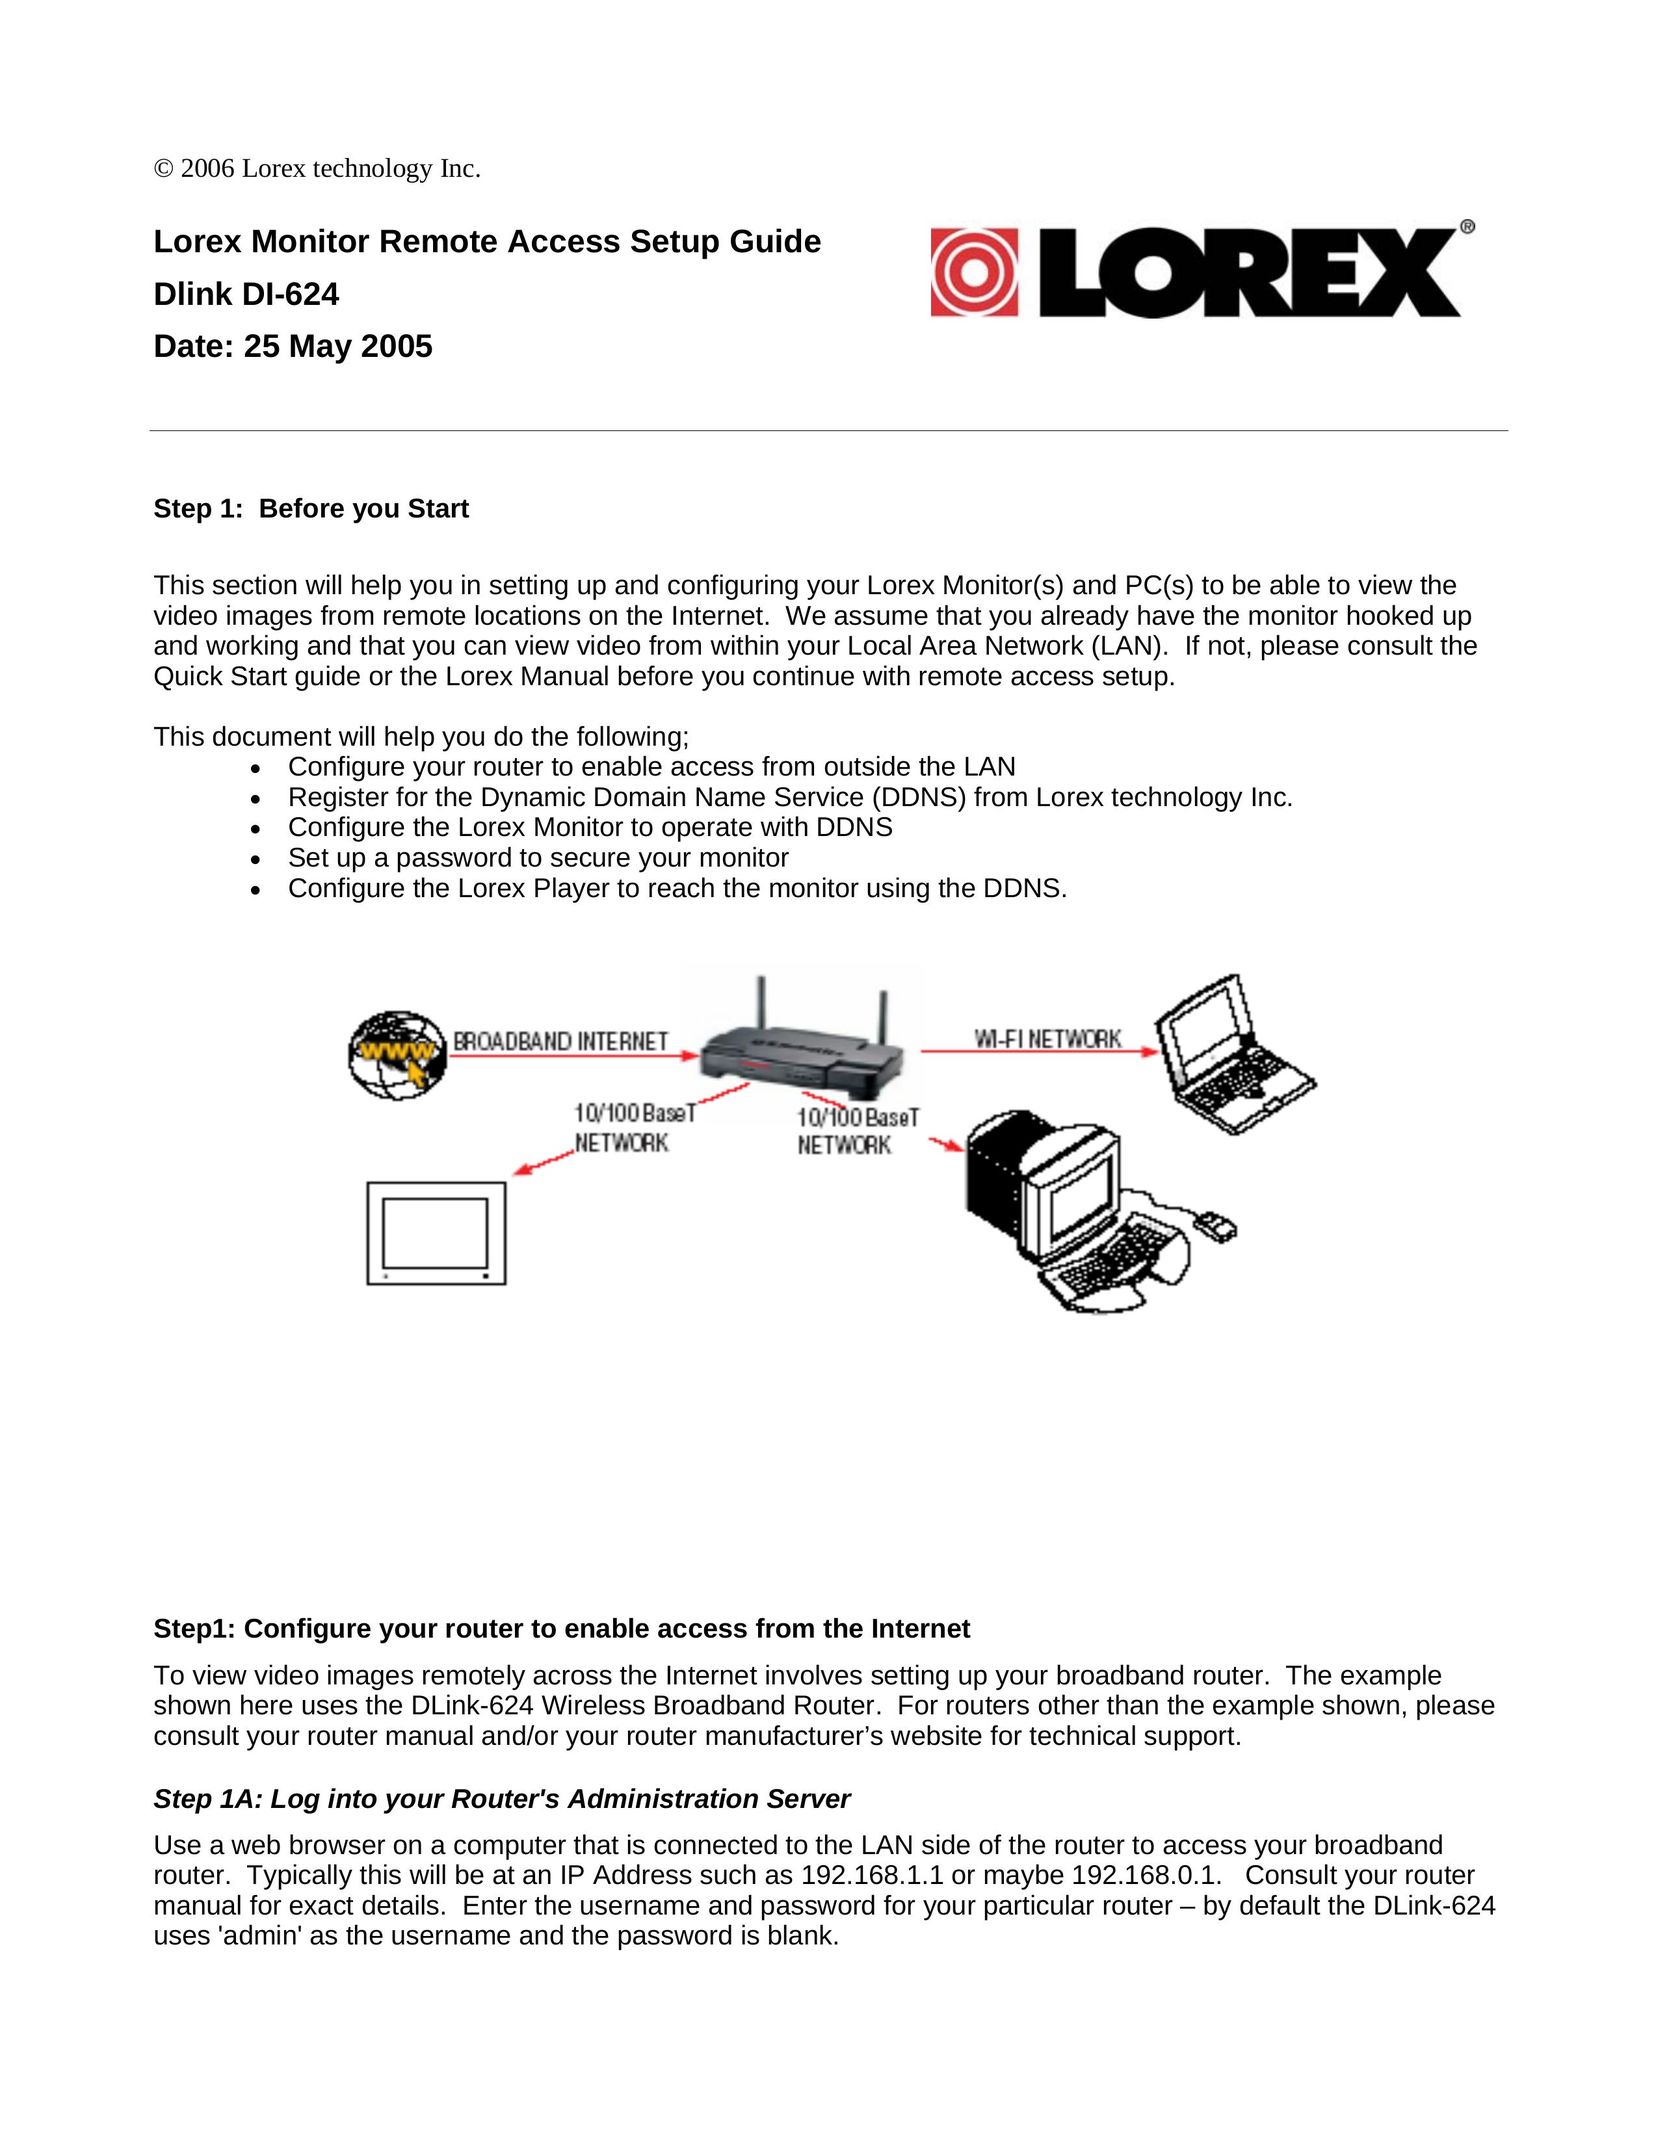 LOREX Technology Dlink DI-624 Network Router User Manual